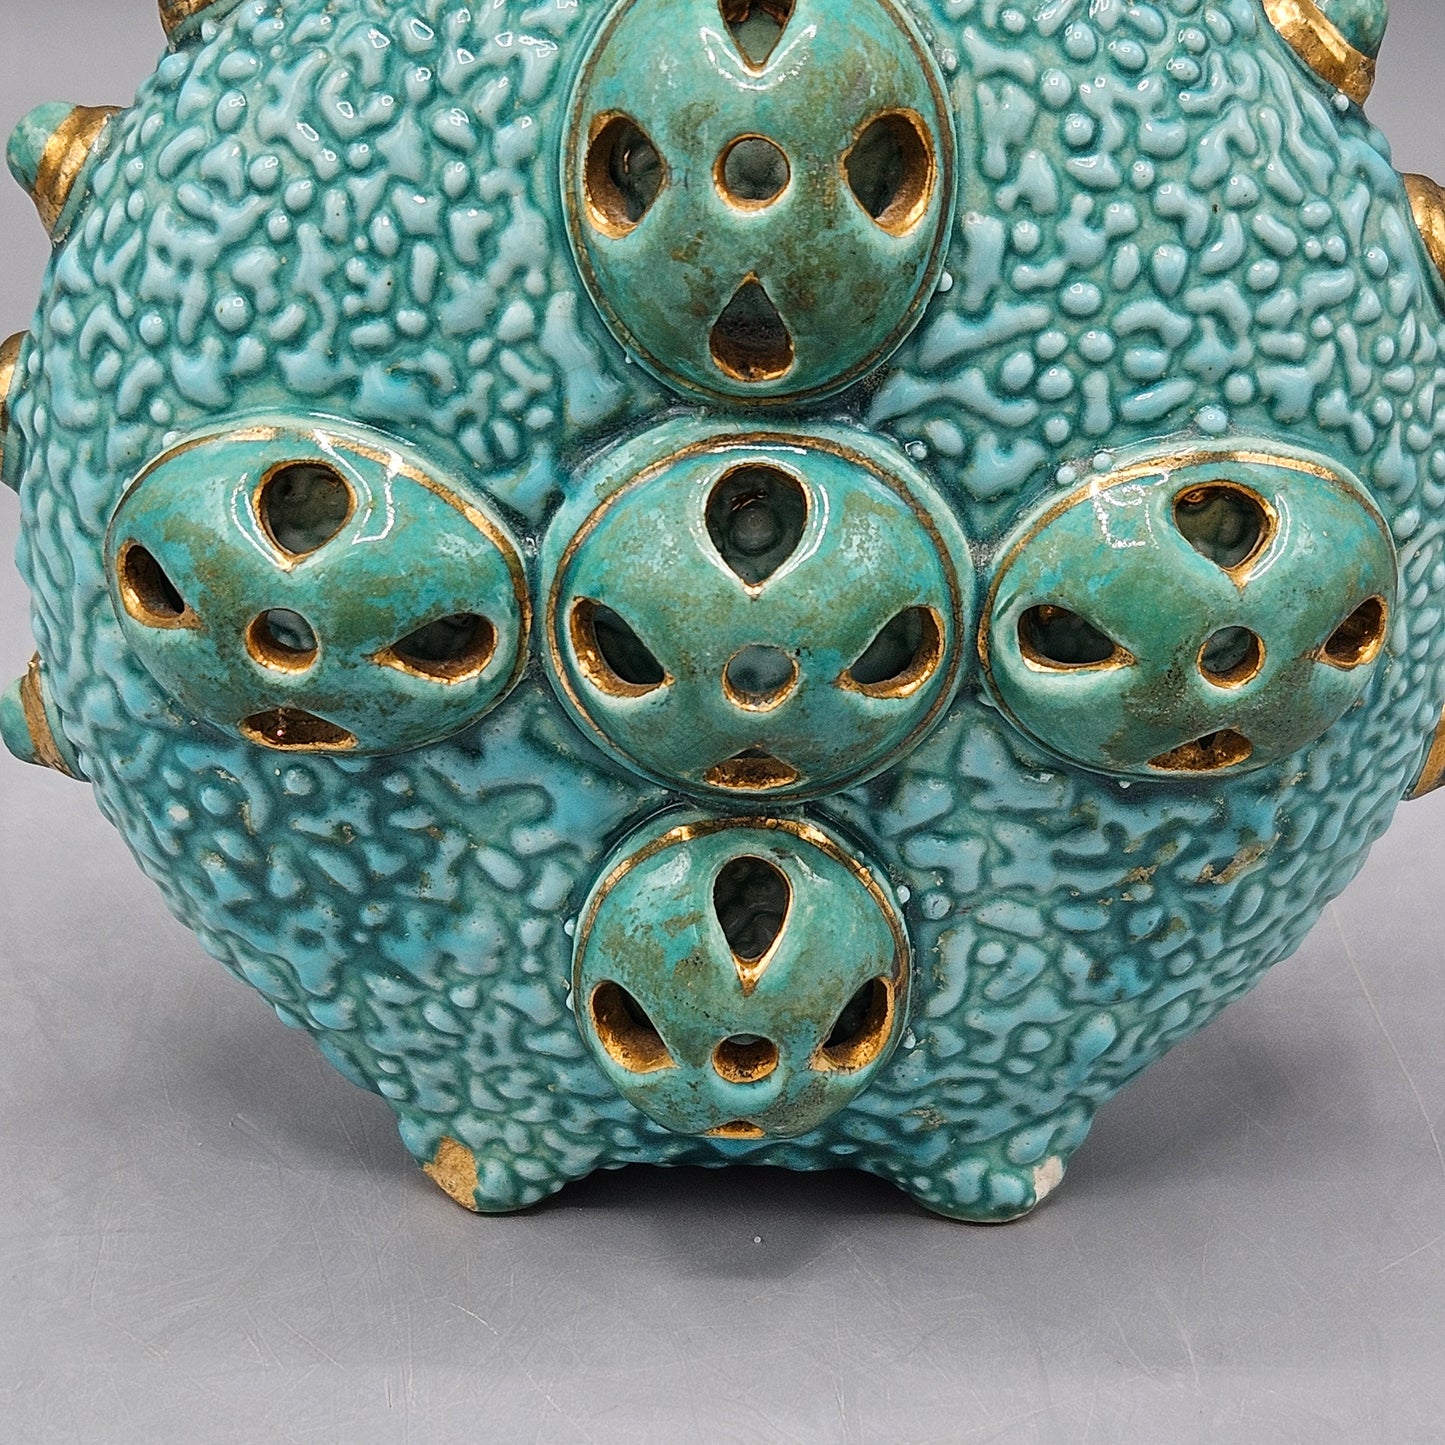 Unique Turquoise Flask Shaped Chinese Porcelain Decorative Accessory